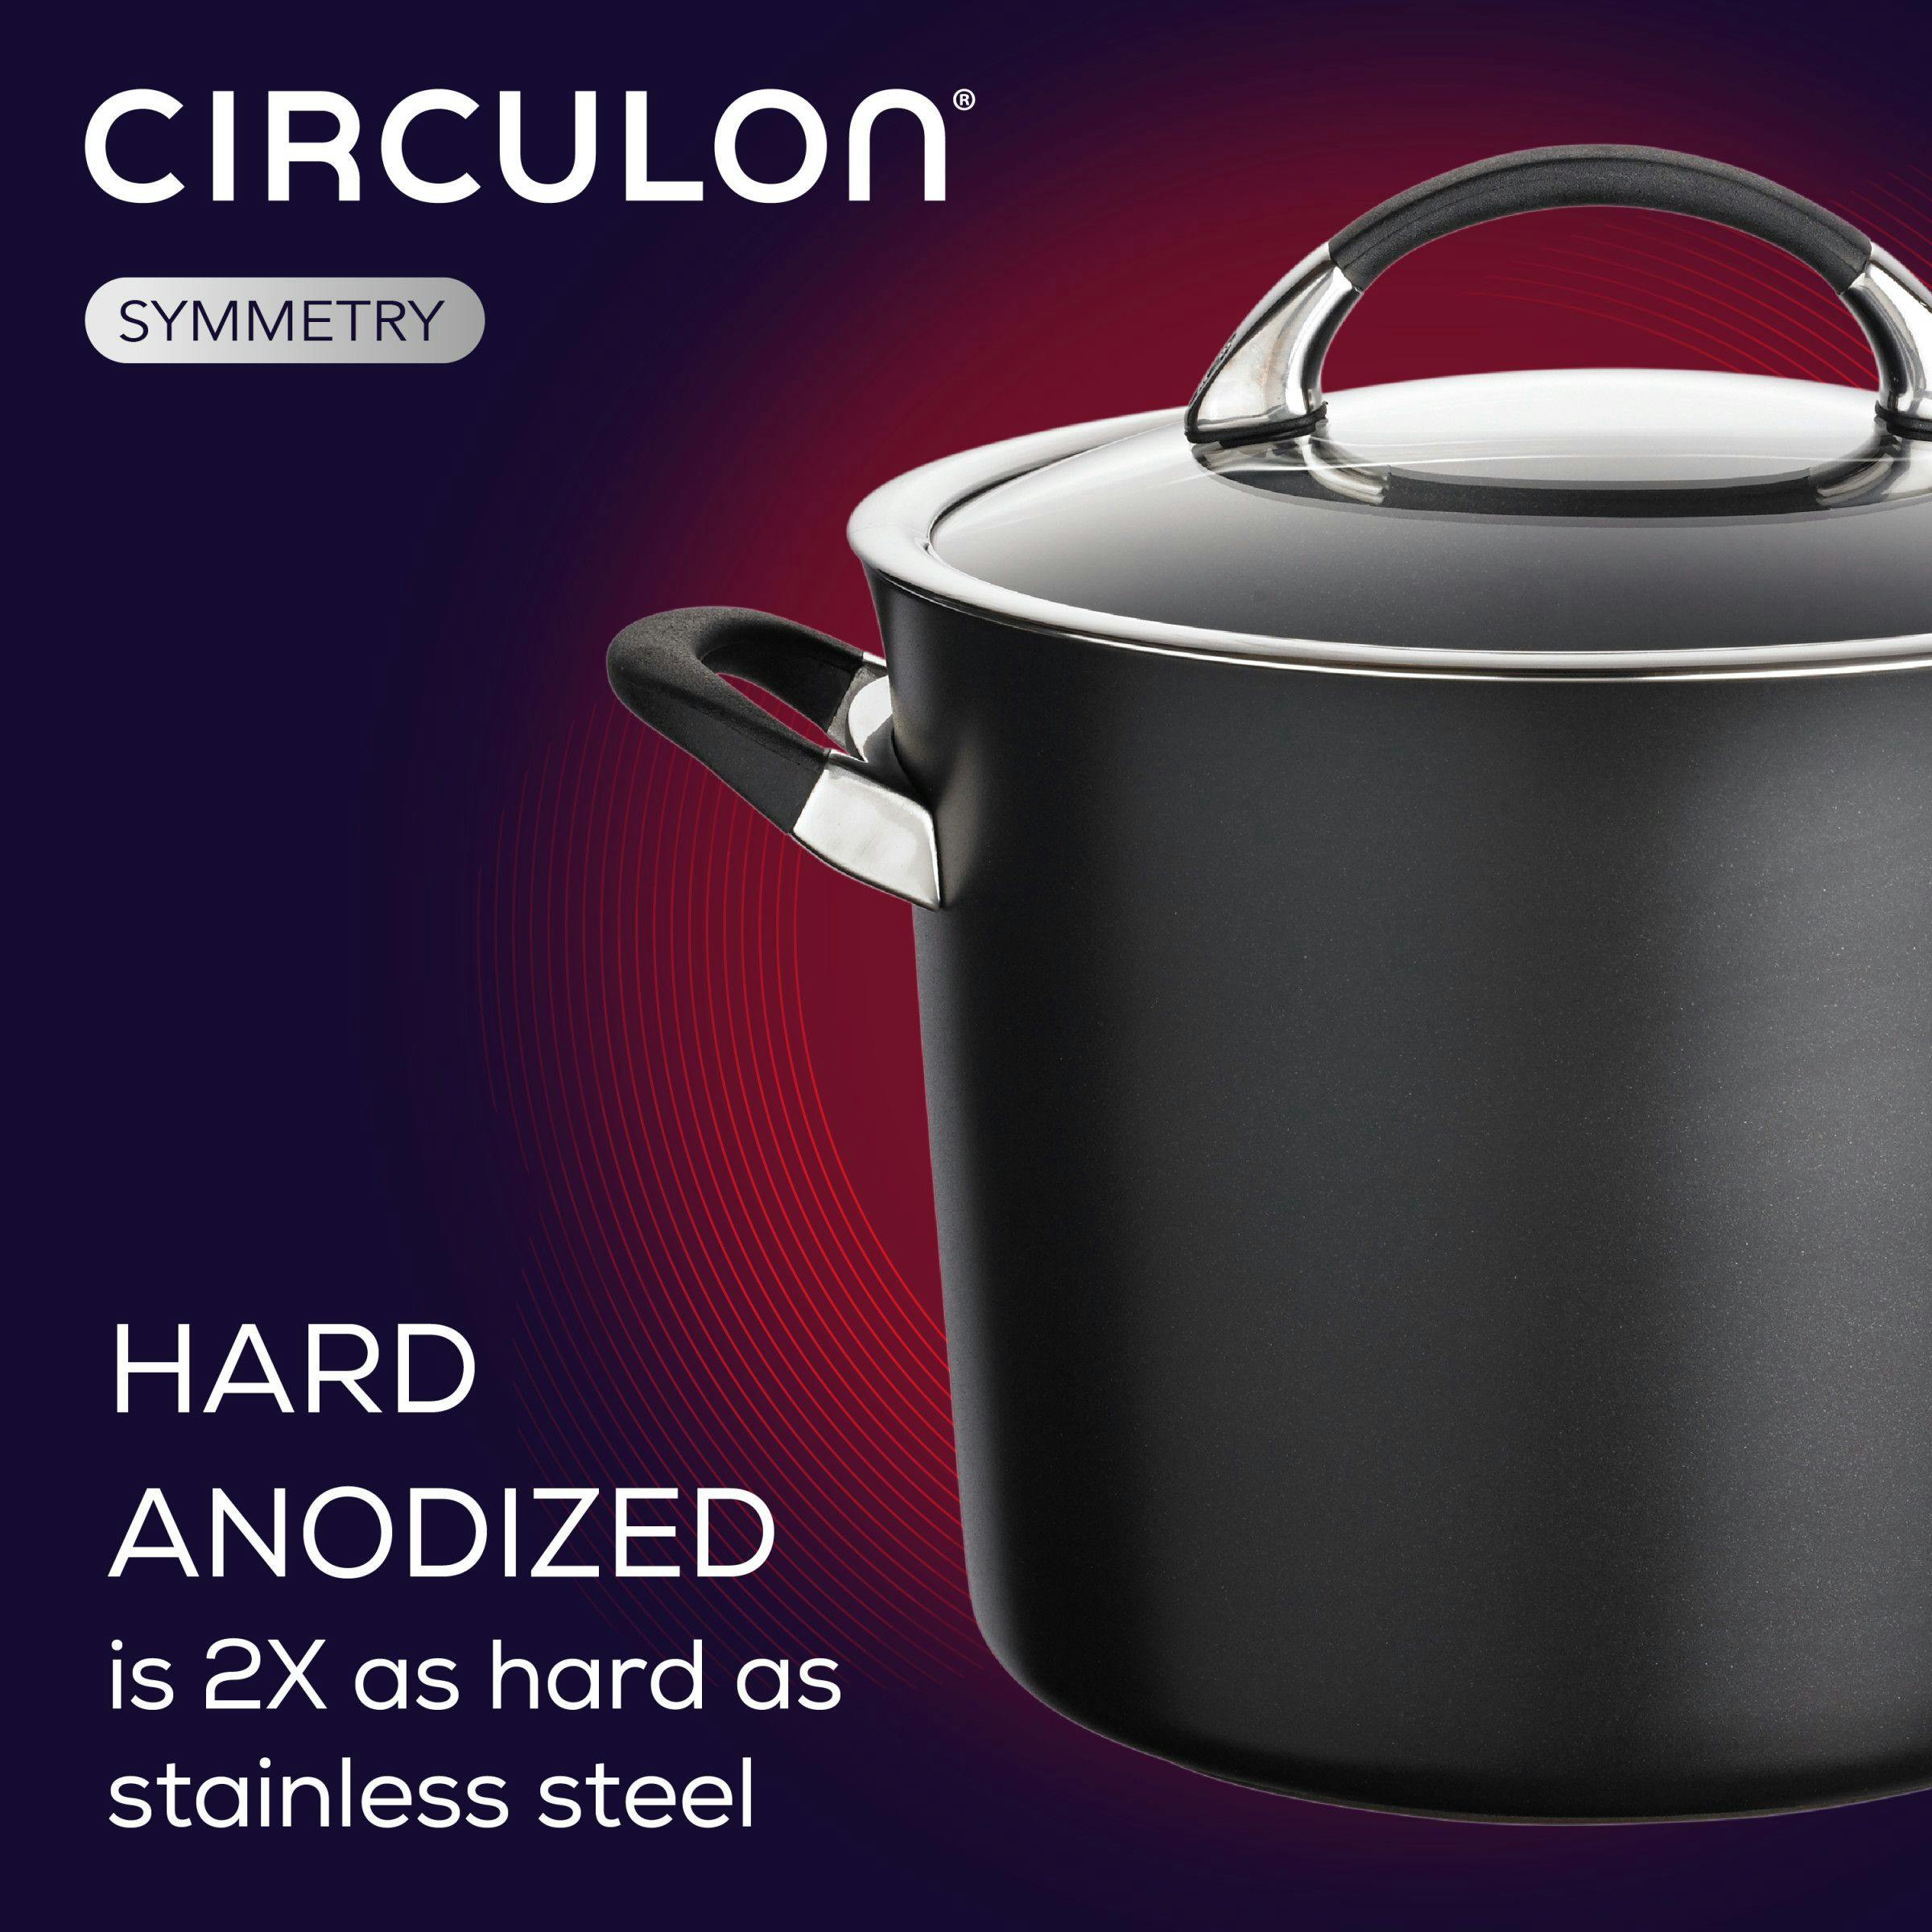 Circulon Symmetry Hard Anodized Nonstick Cookware Induction Pots and Pans Set, 11-Piece, Black